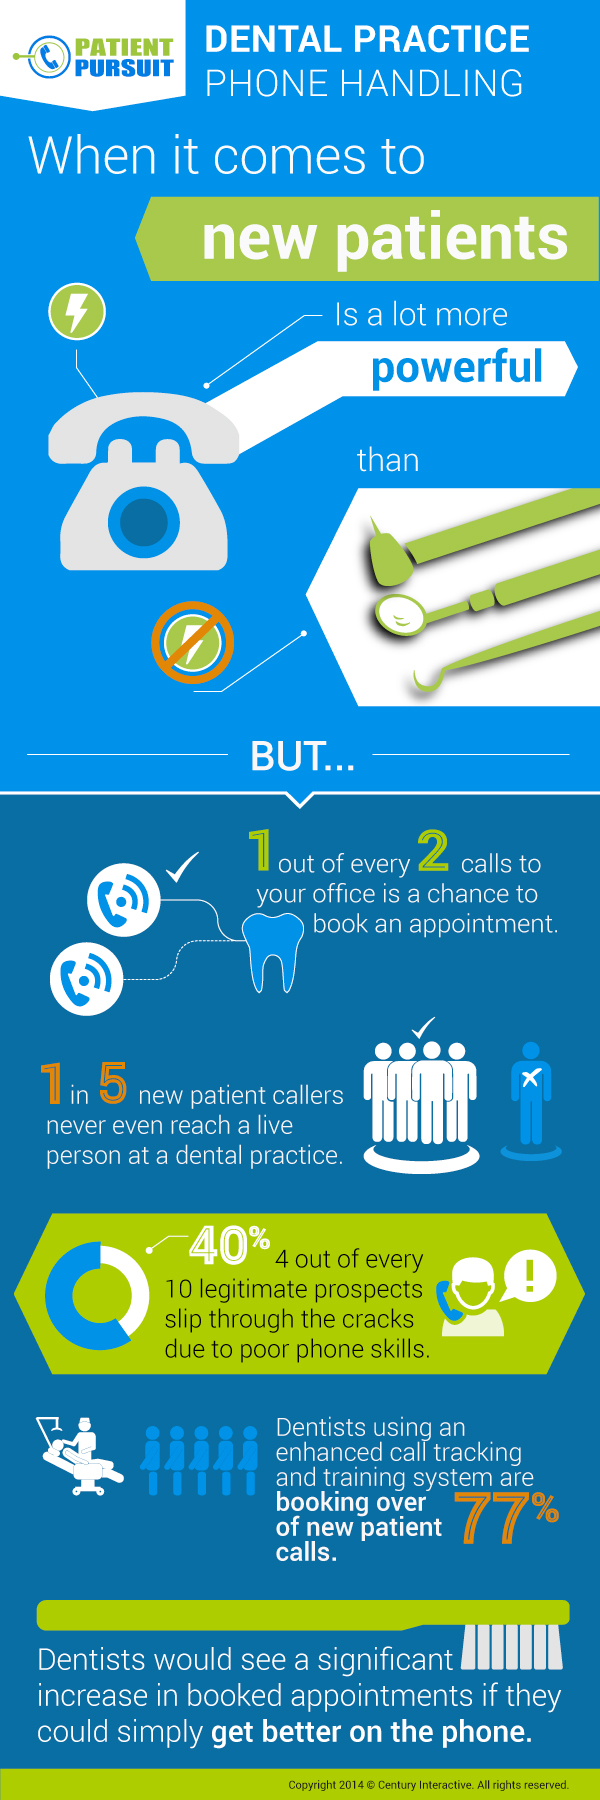 Dental Practice Case Study Infographic